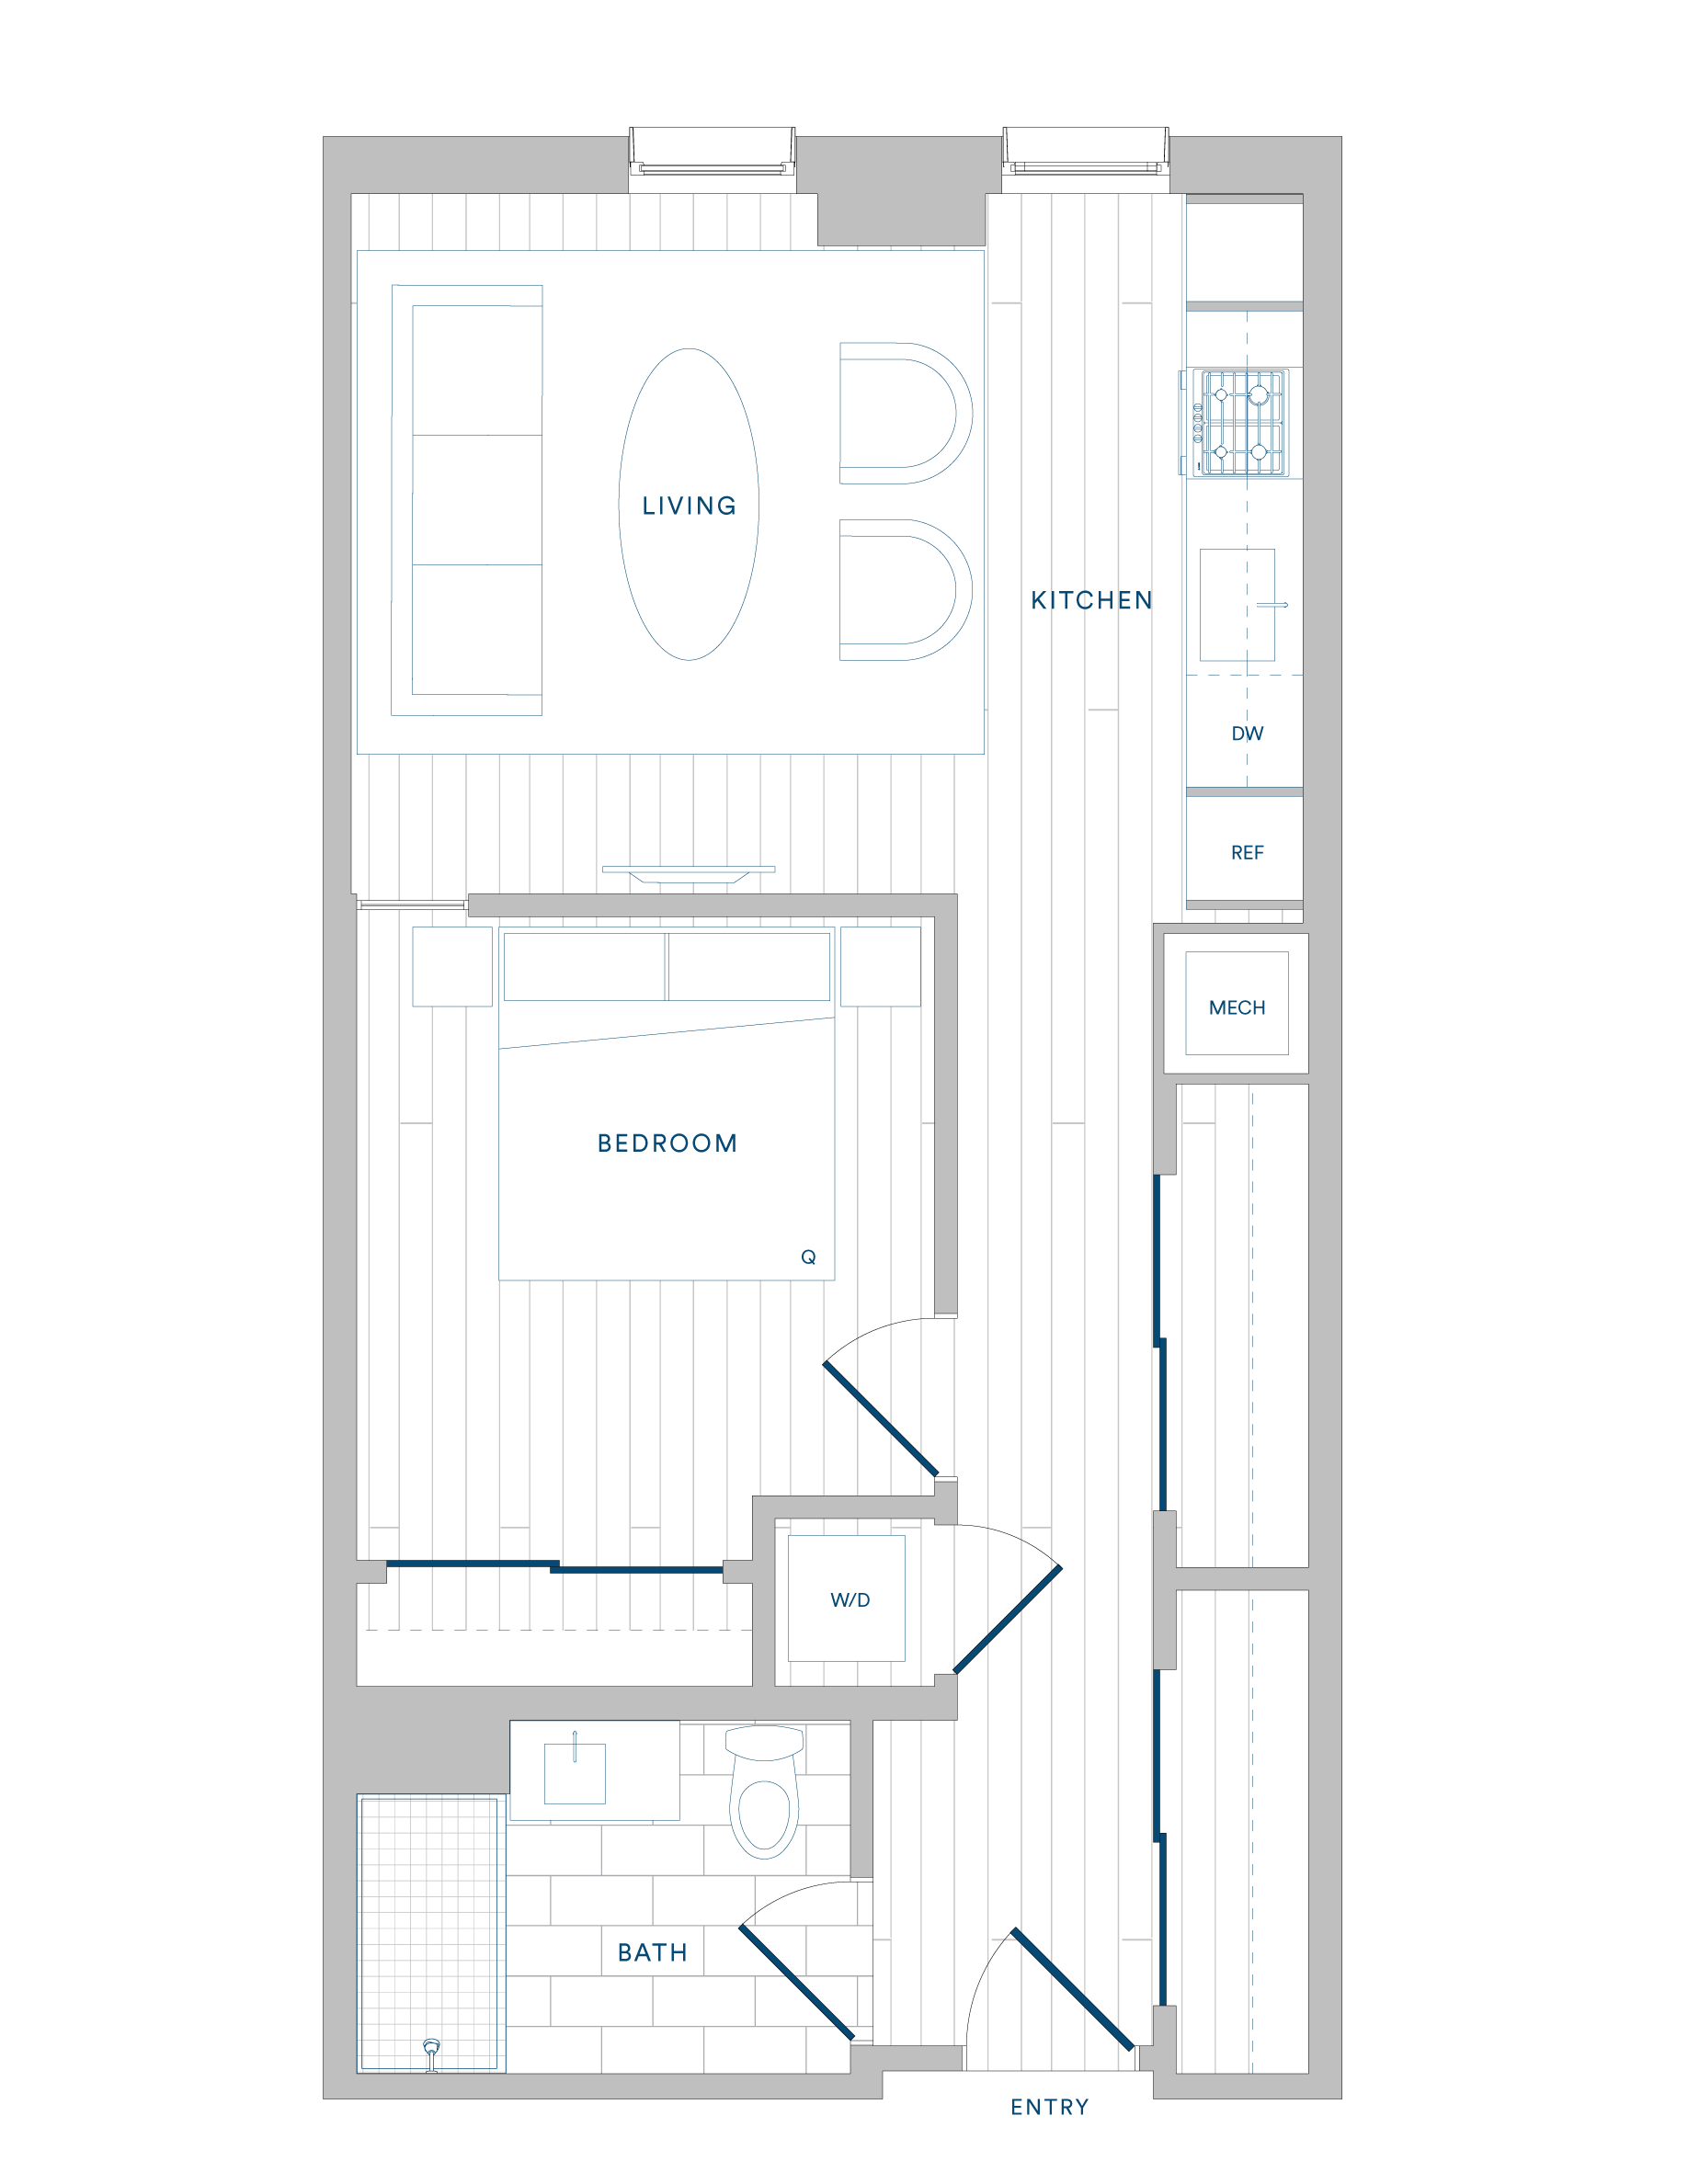 Floorplan for Apartment #206, 1 bedroom unit at Margarite